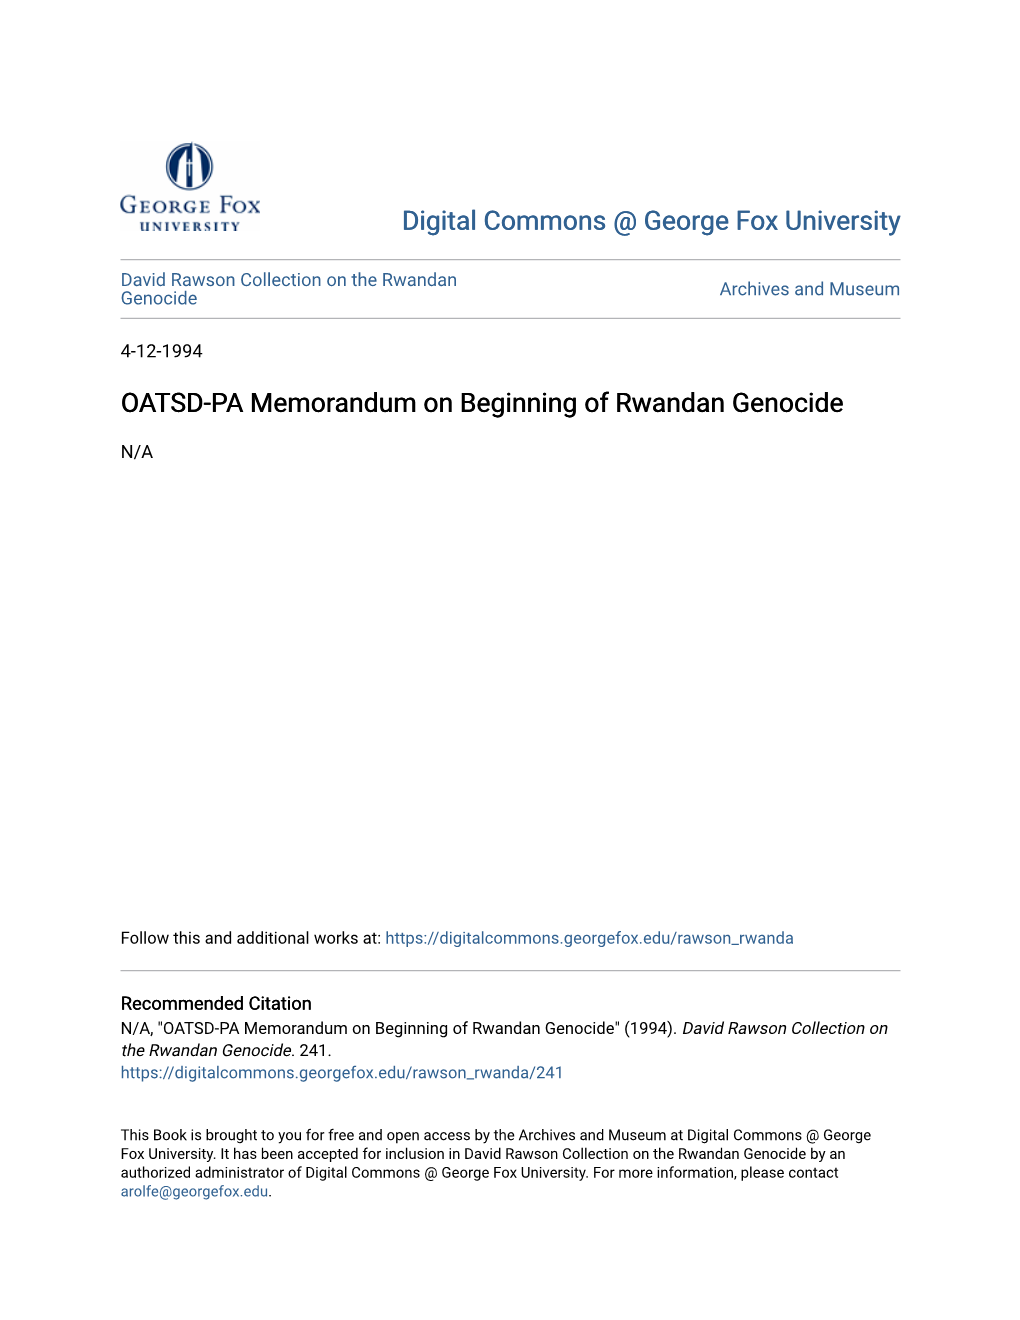 OATSD-PA Memorandum on Beginning of Rwandan Genocide